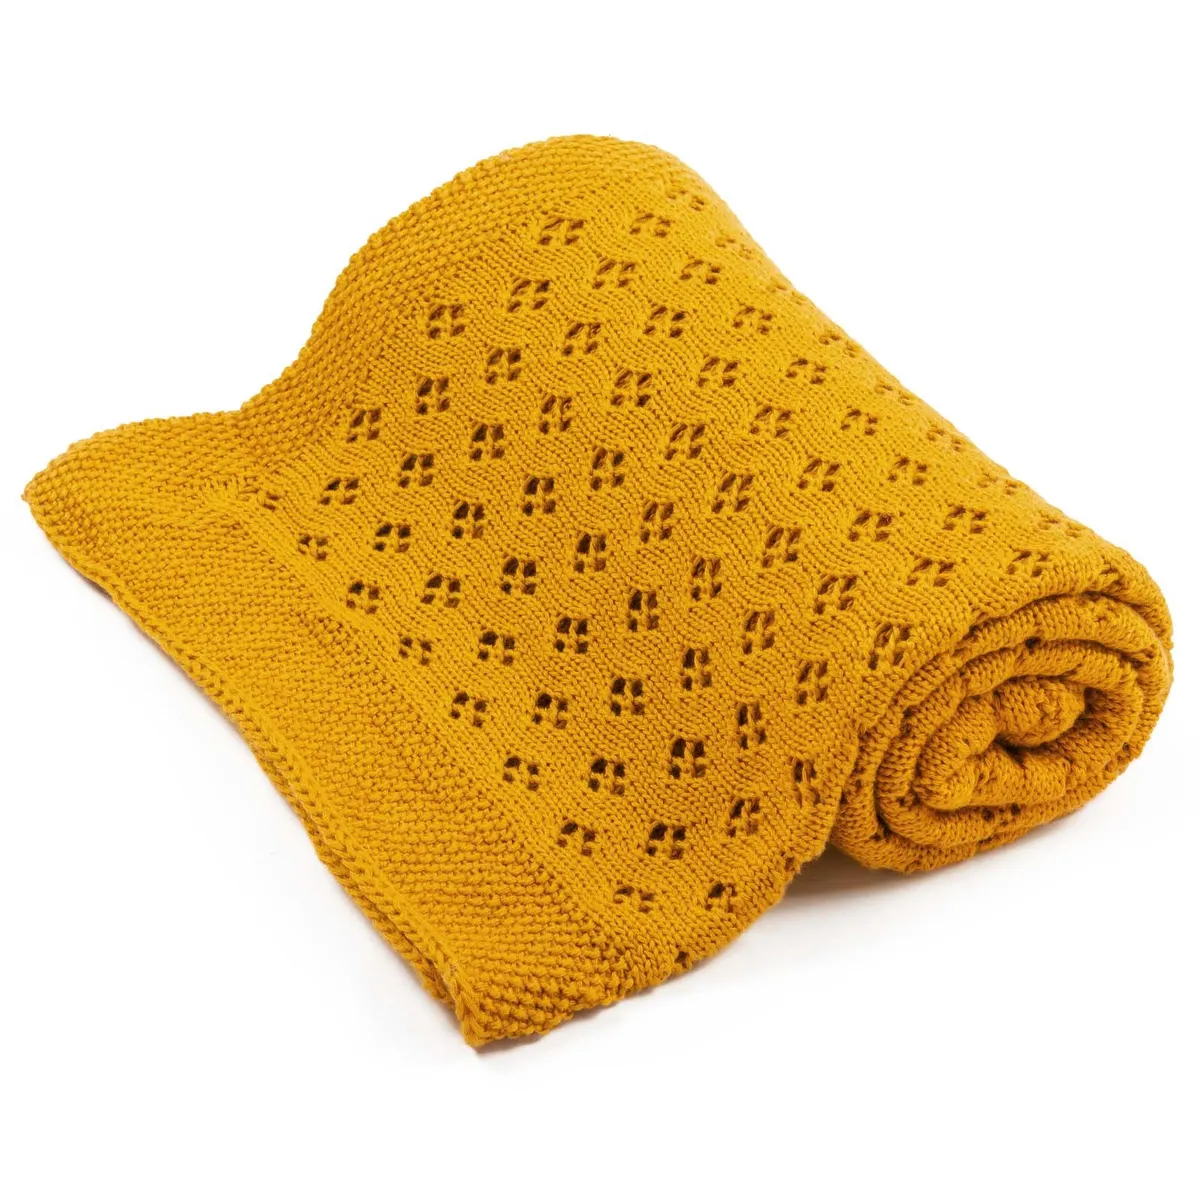 bamboo blanket openwork 100×80 cm yellow musta 100% bamboo yarn